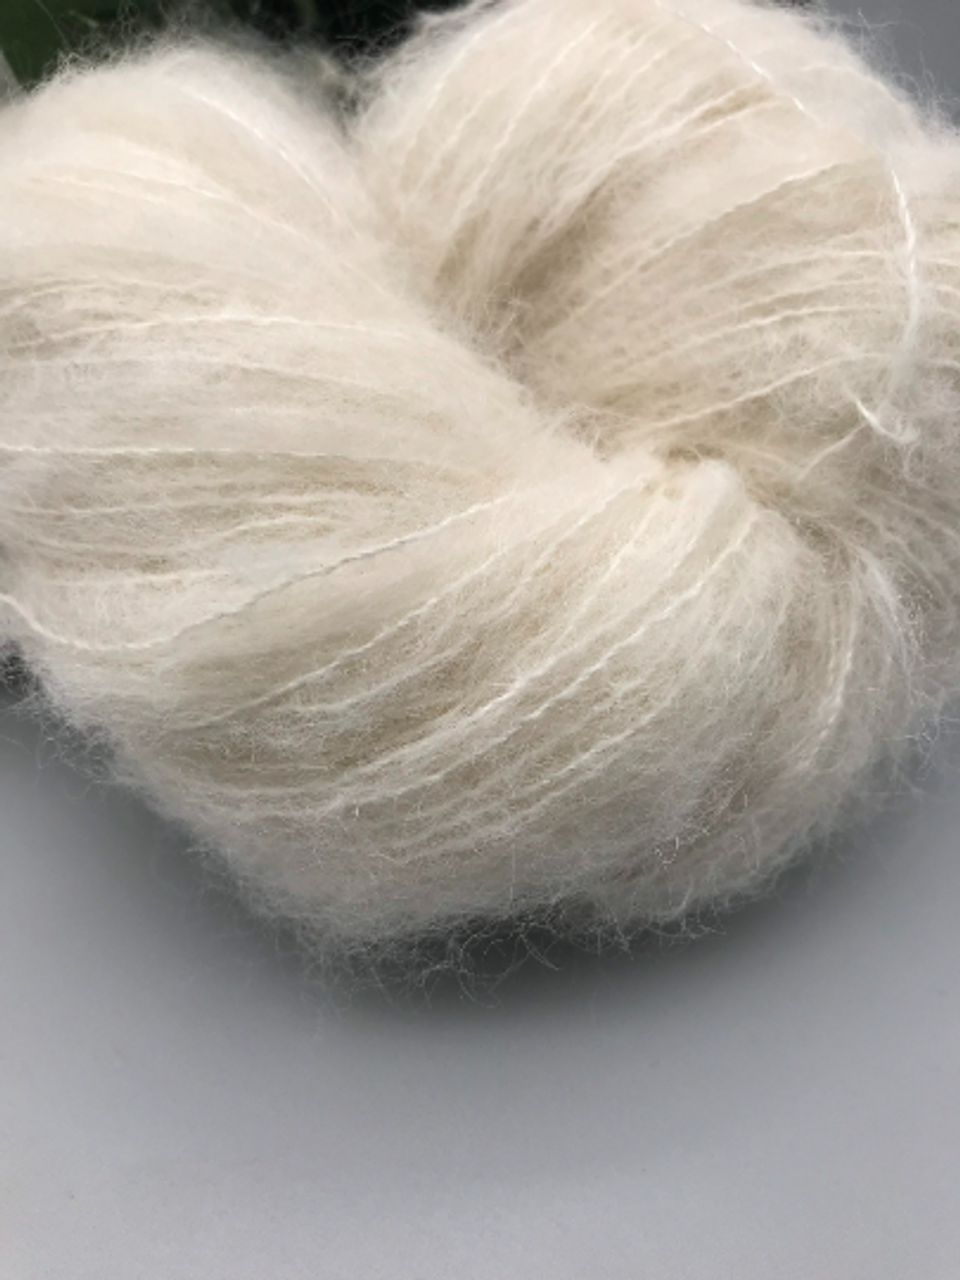 Product Details, Kiku - 100% Bombyx Spun Silk Yarn, 20/2, lace weight (on  cones), Natural (Undyed), Yarns - Undyed